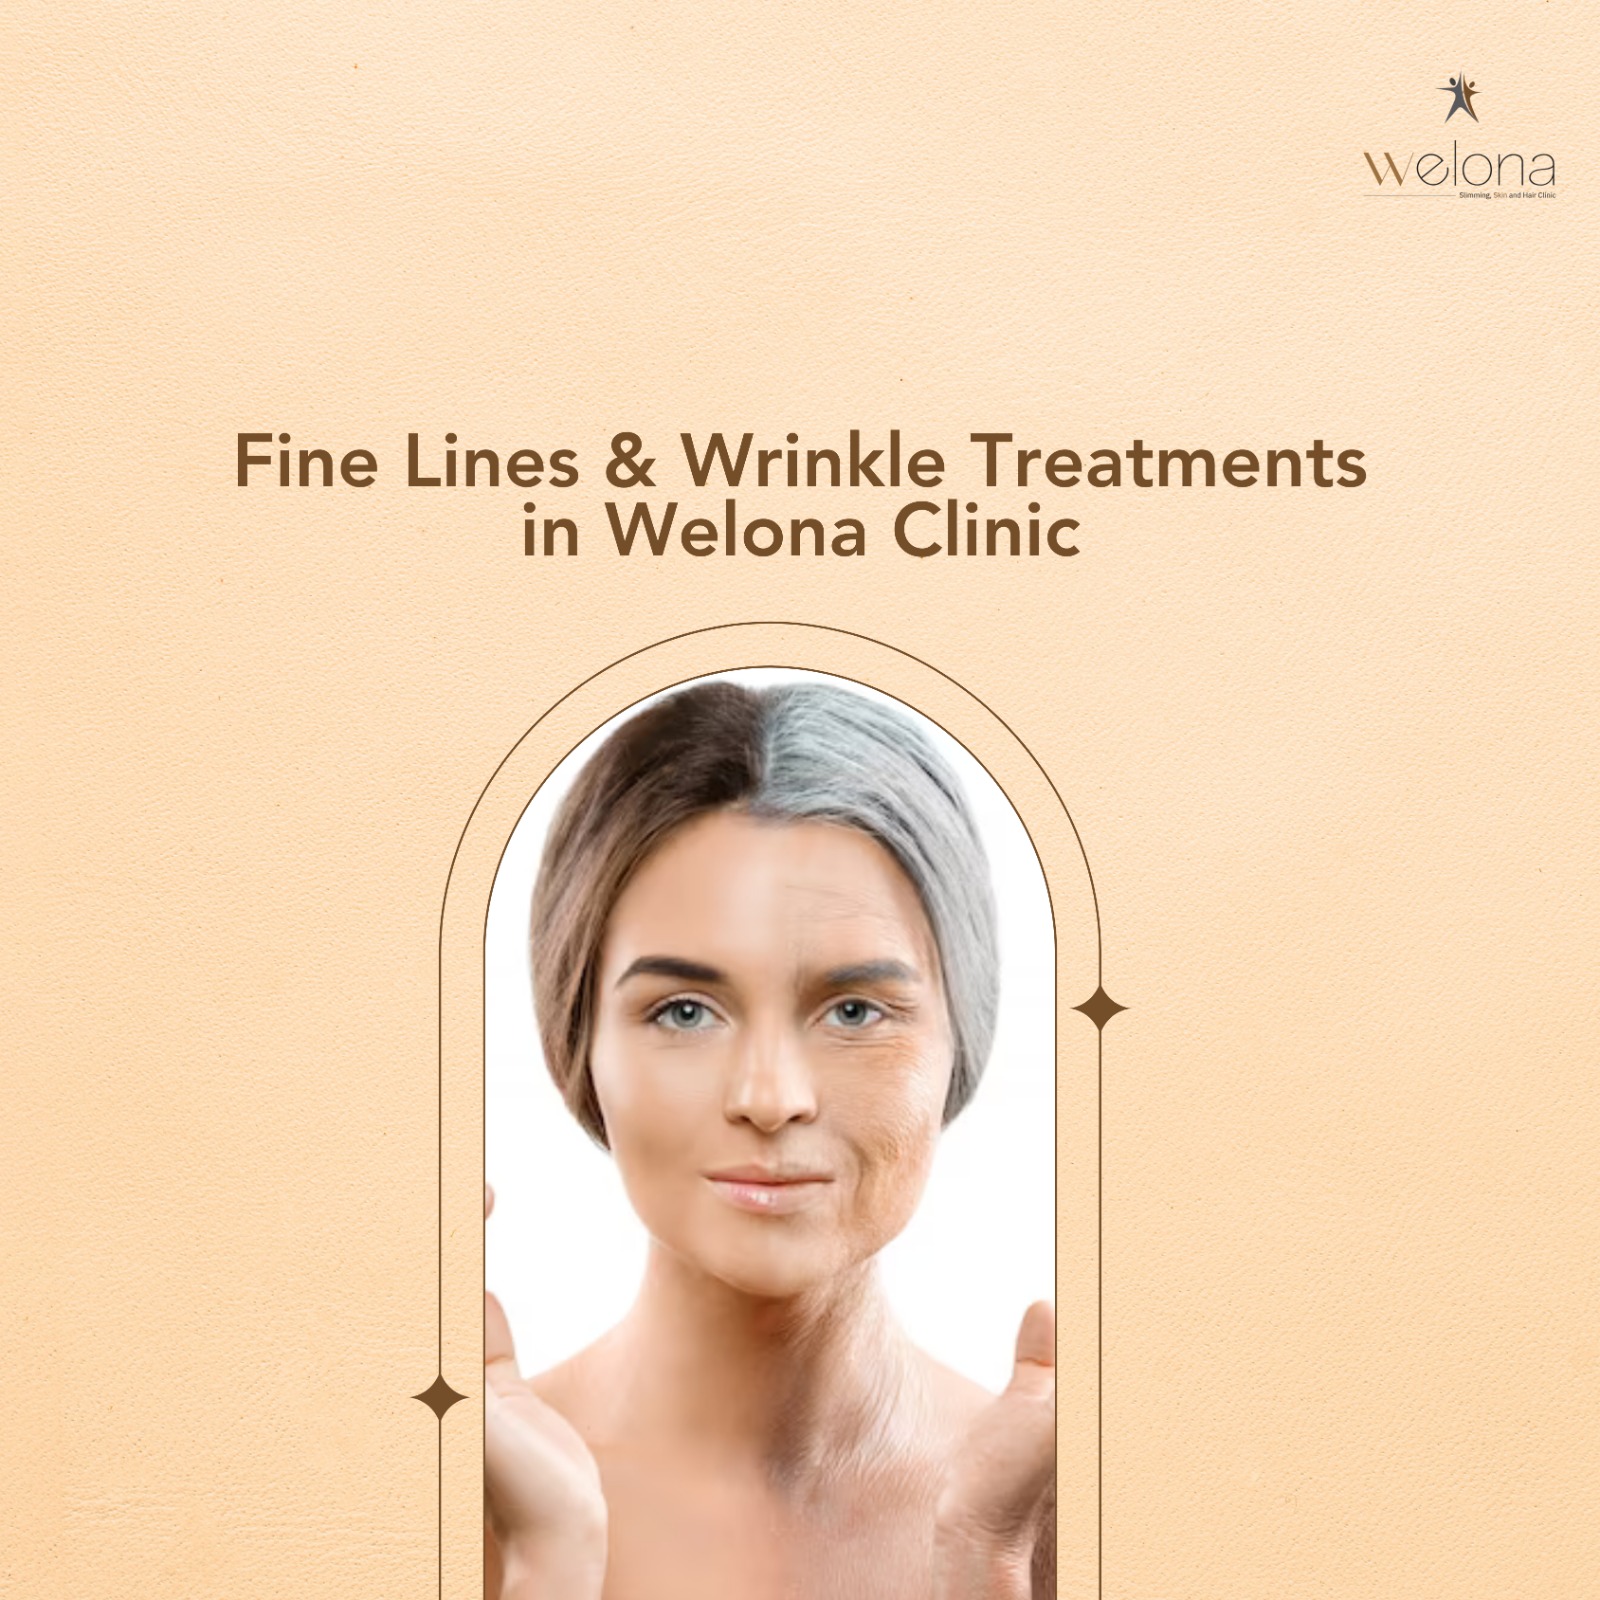 Fine Lines & Wrinkle Treatments in Welona Clinic